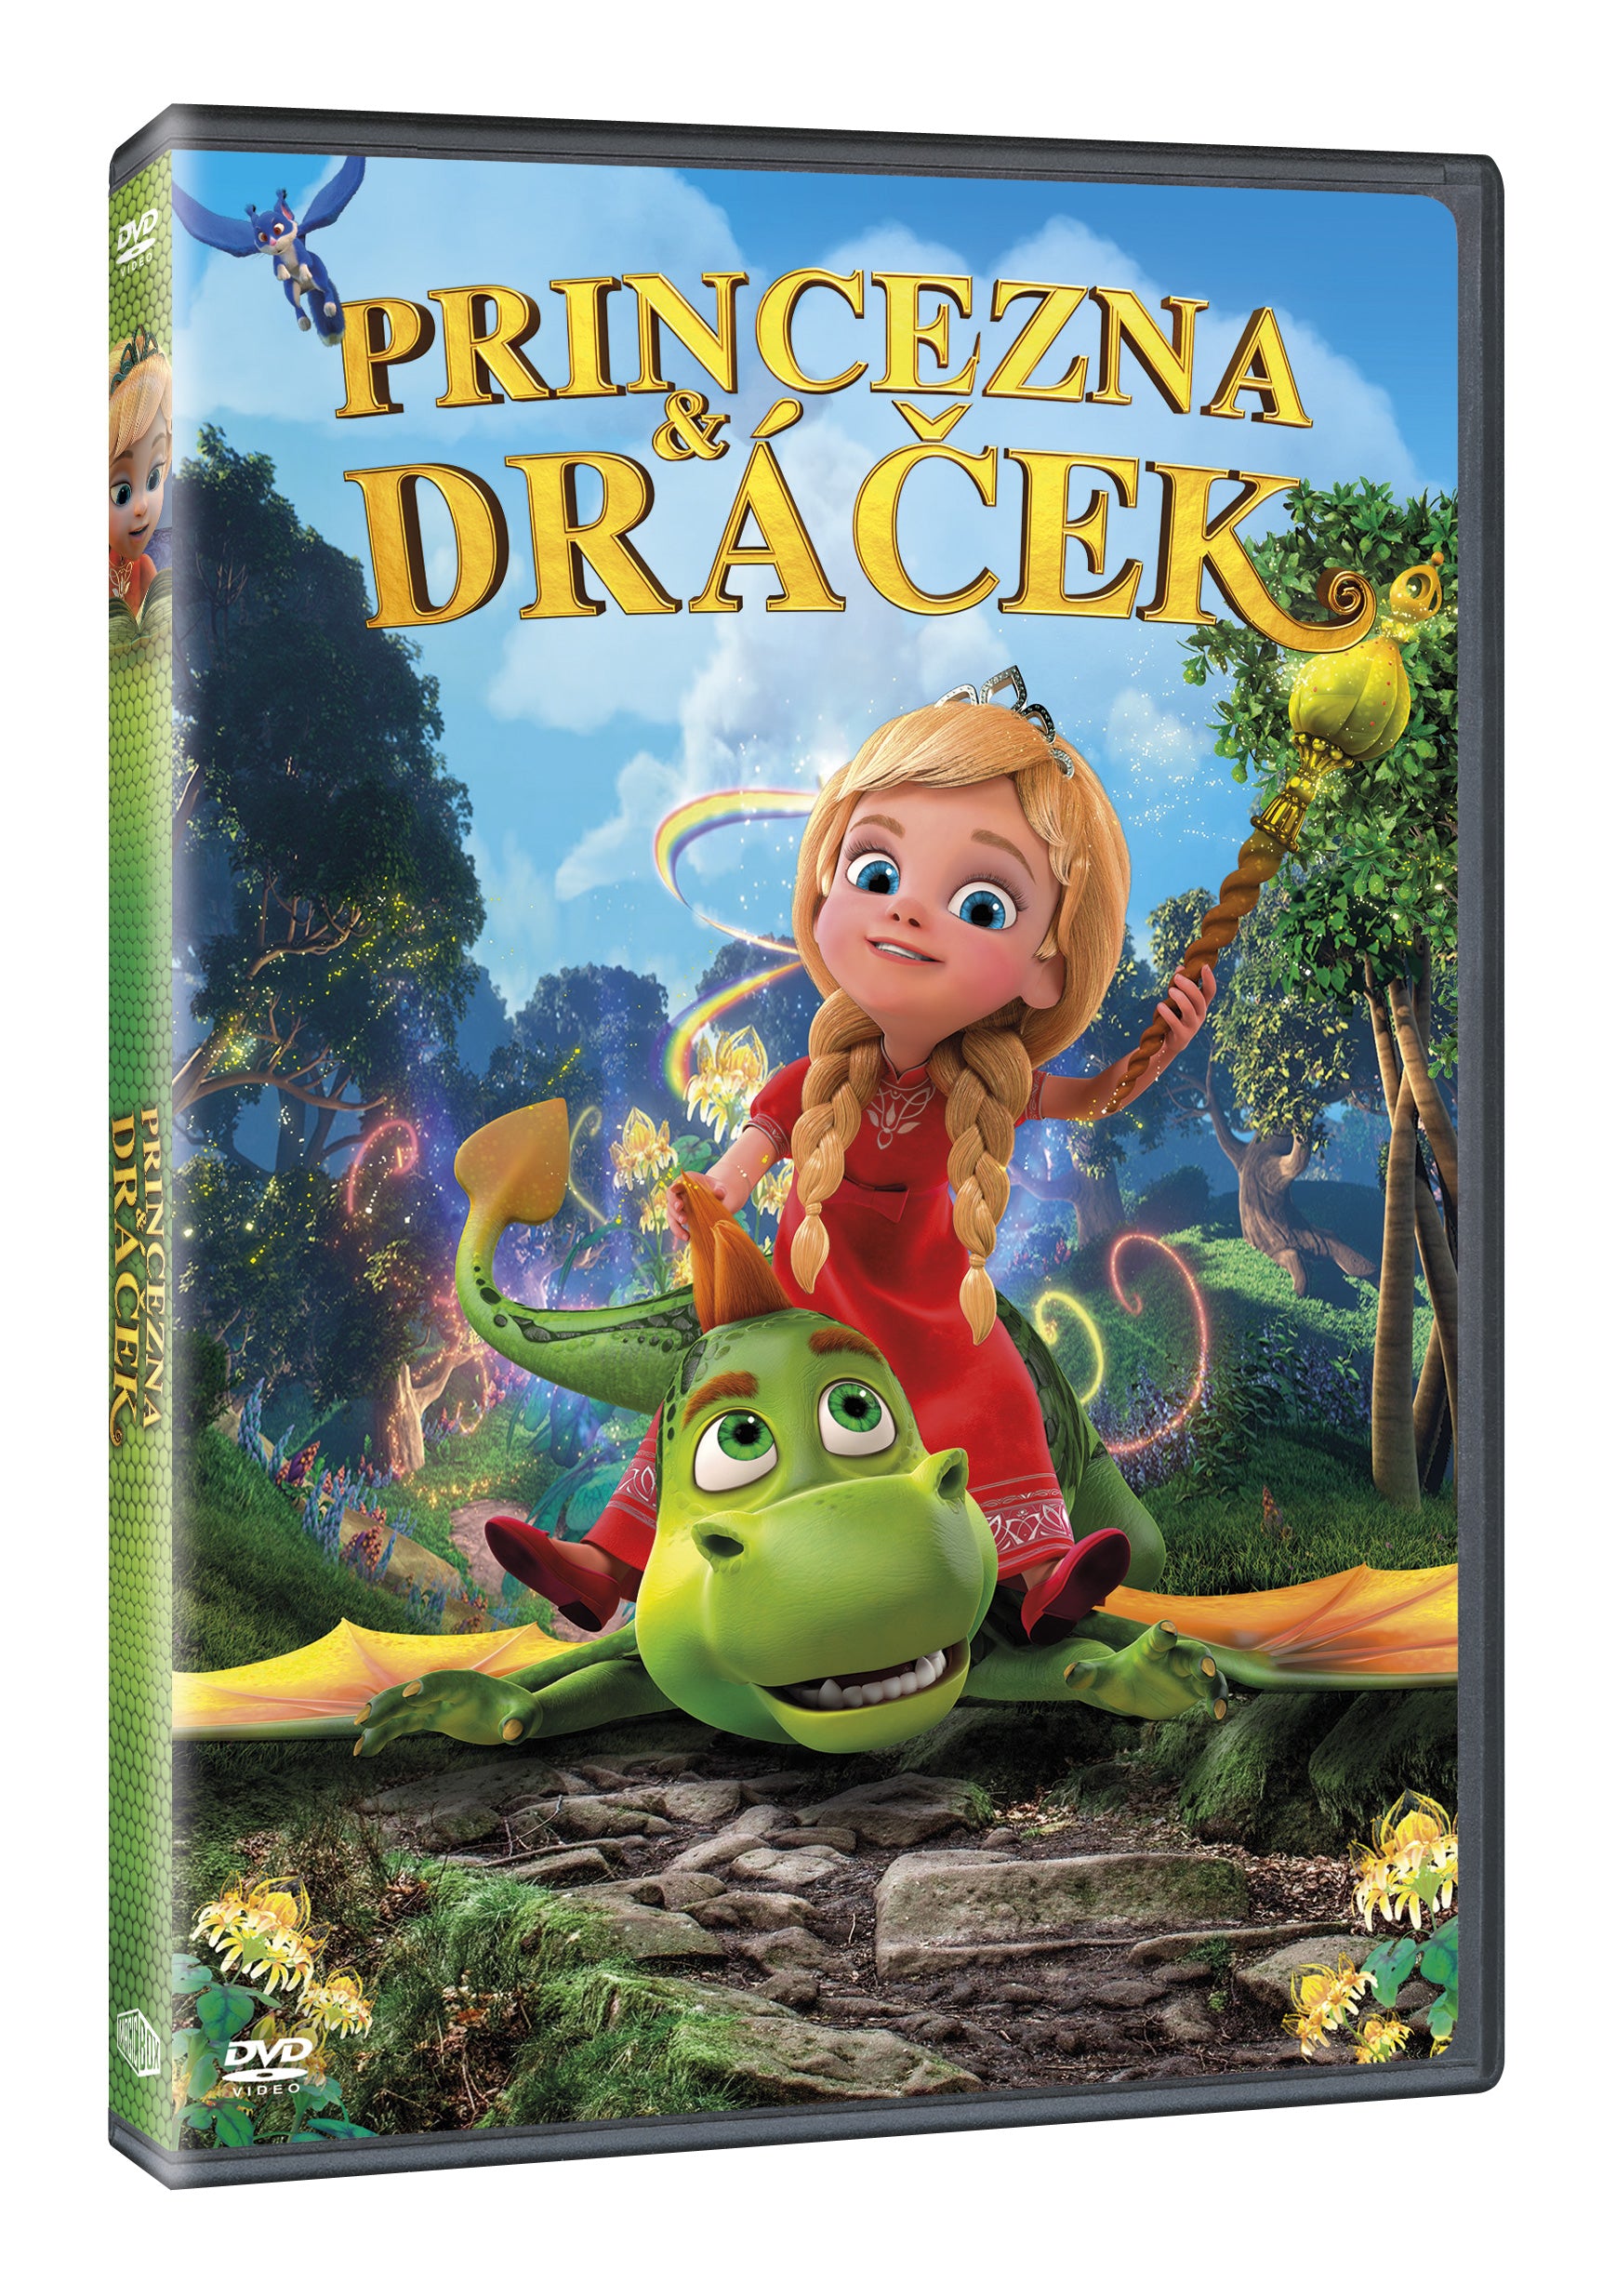 Princezna a dracek DVD / Princessa i drakon